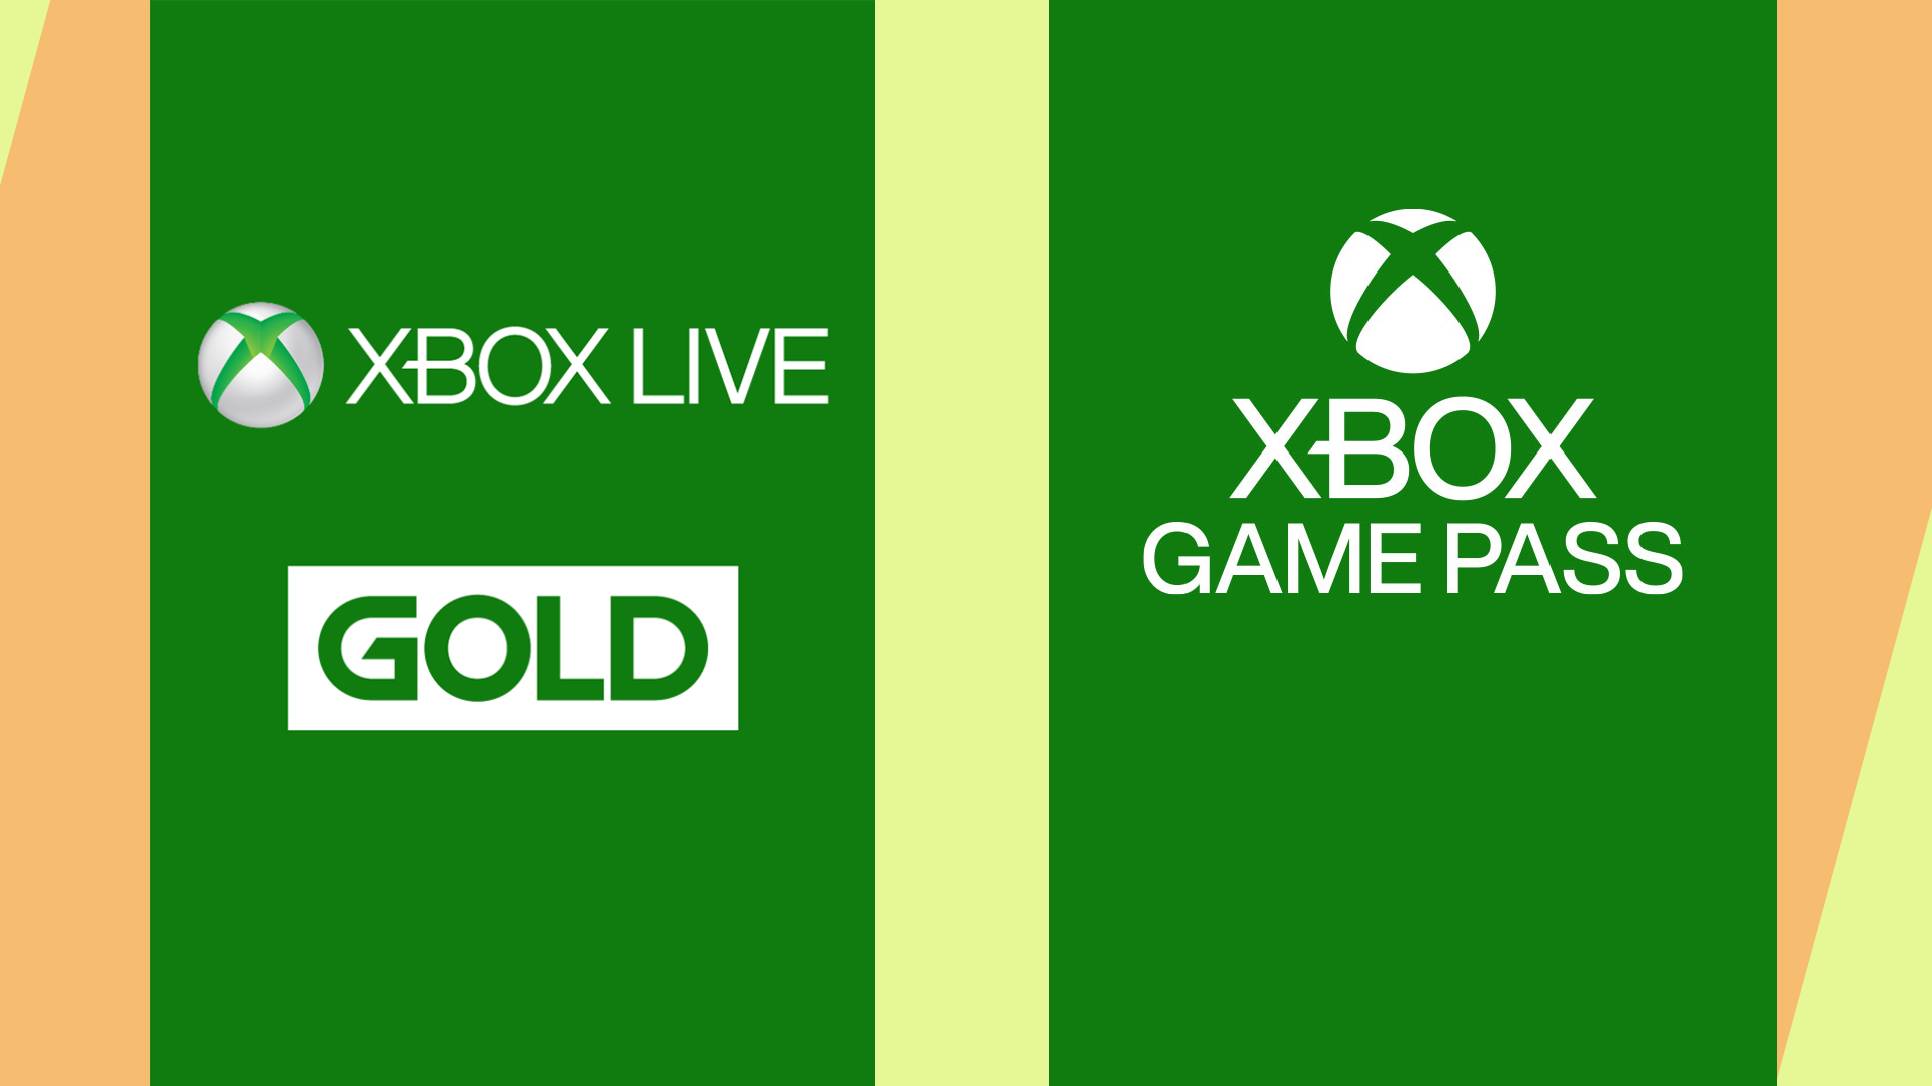 Xbox Live Gold vs. Xbox Game Pass Ultimate: ¿Cuál elegir?